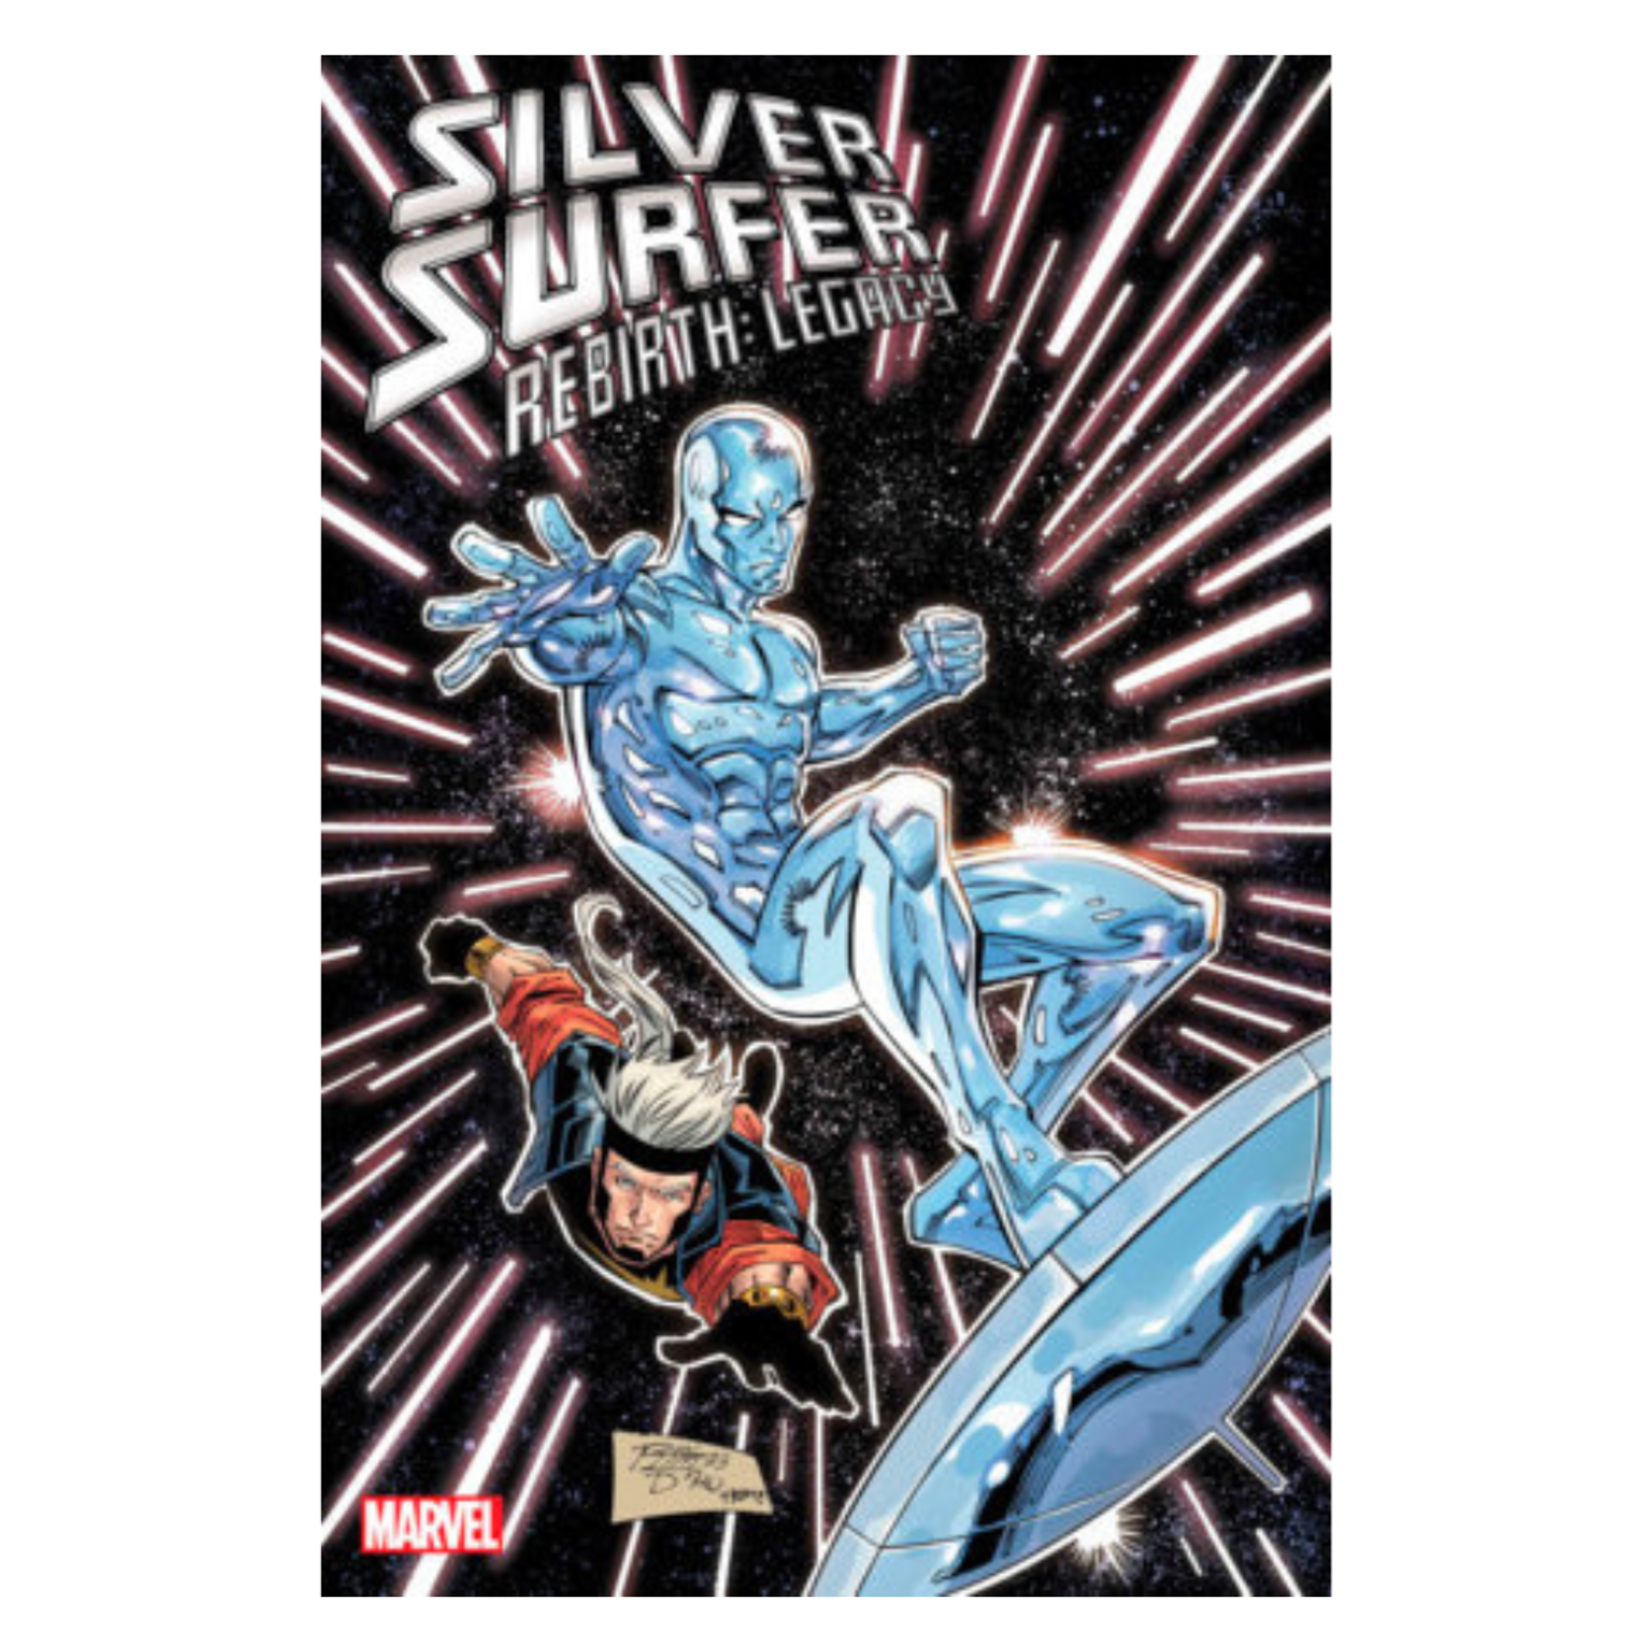 Marvel Comics Silver Surfer Rebirth Legacy #1